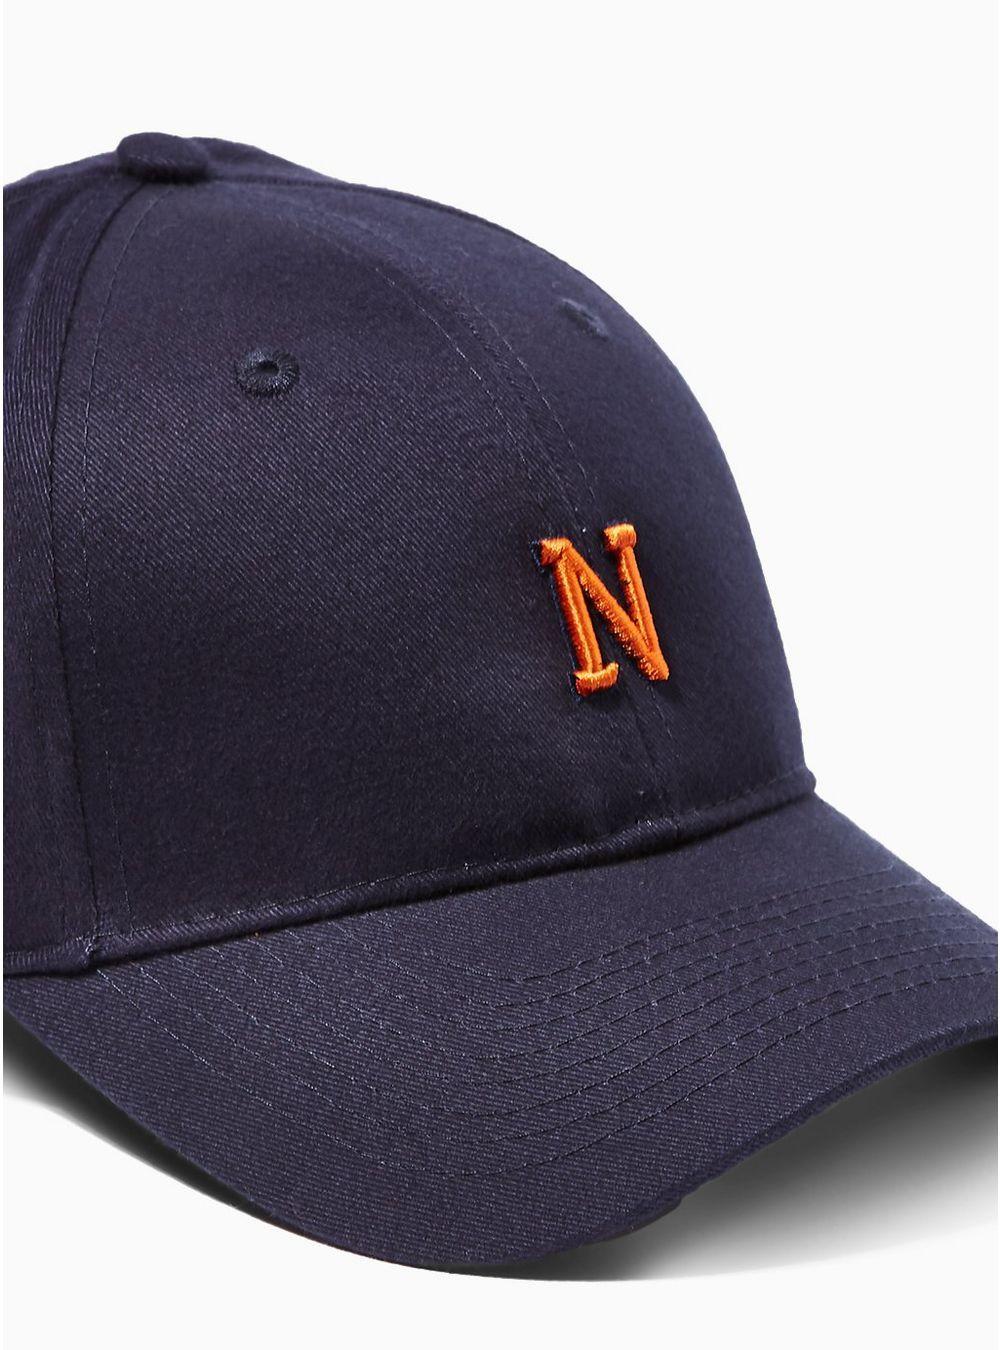 Orange Curve Logo - Navy with Orange Curve Peak Cap - TOPMAN